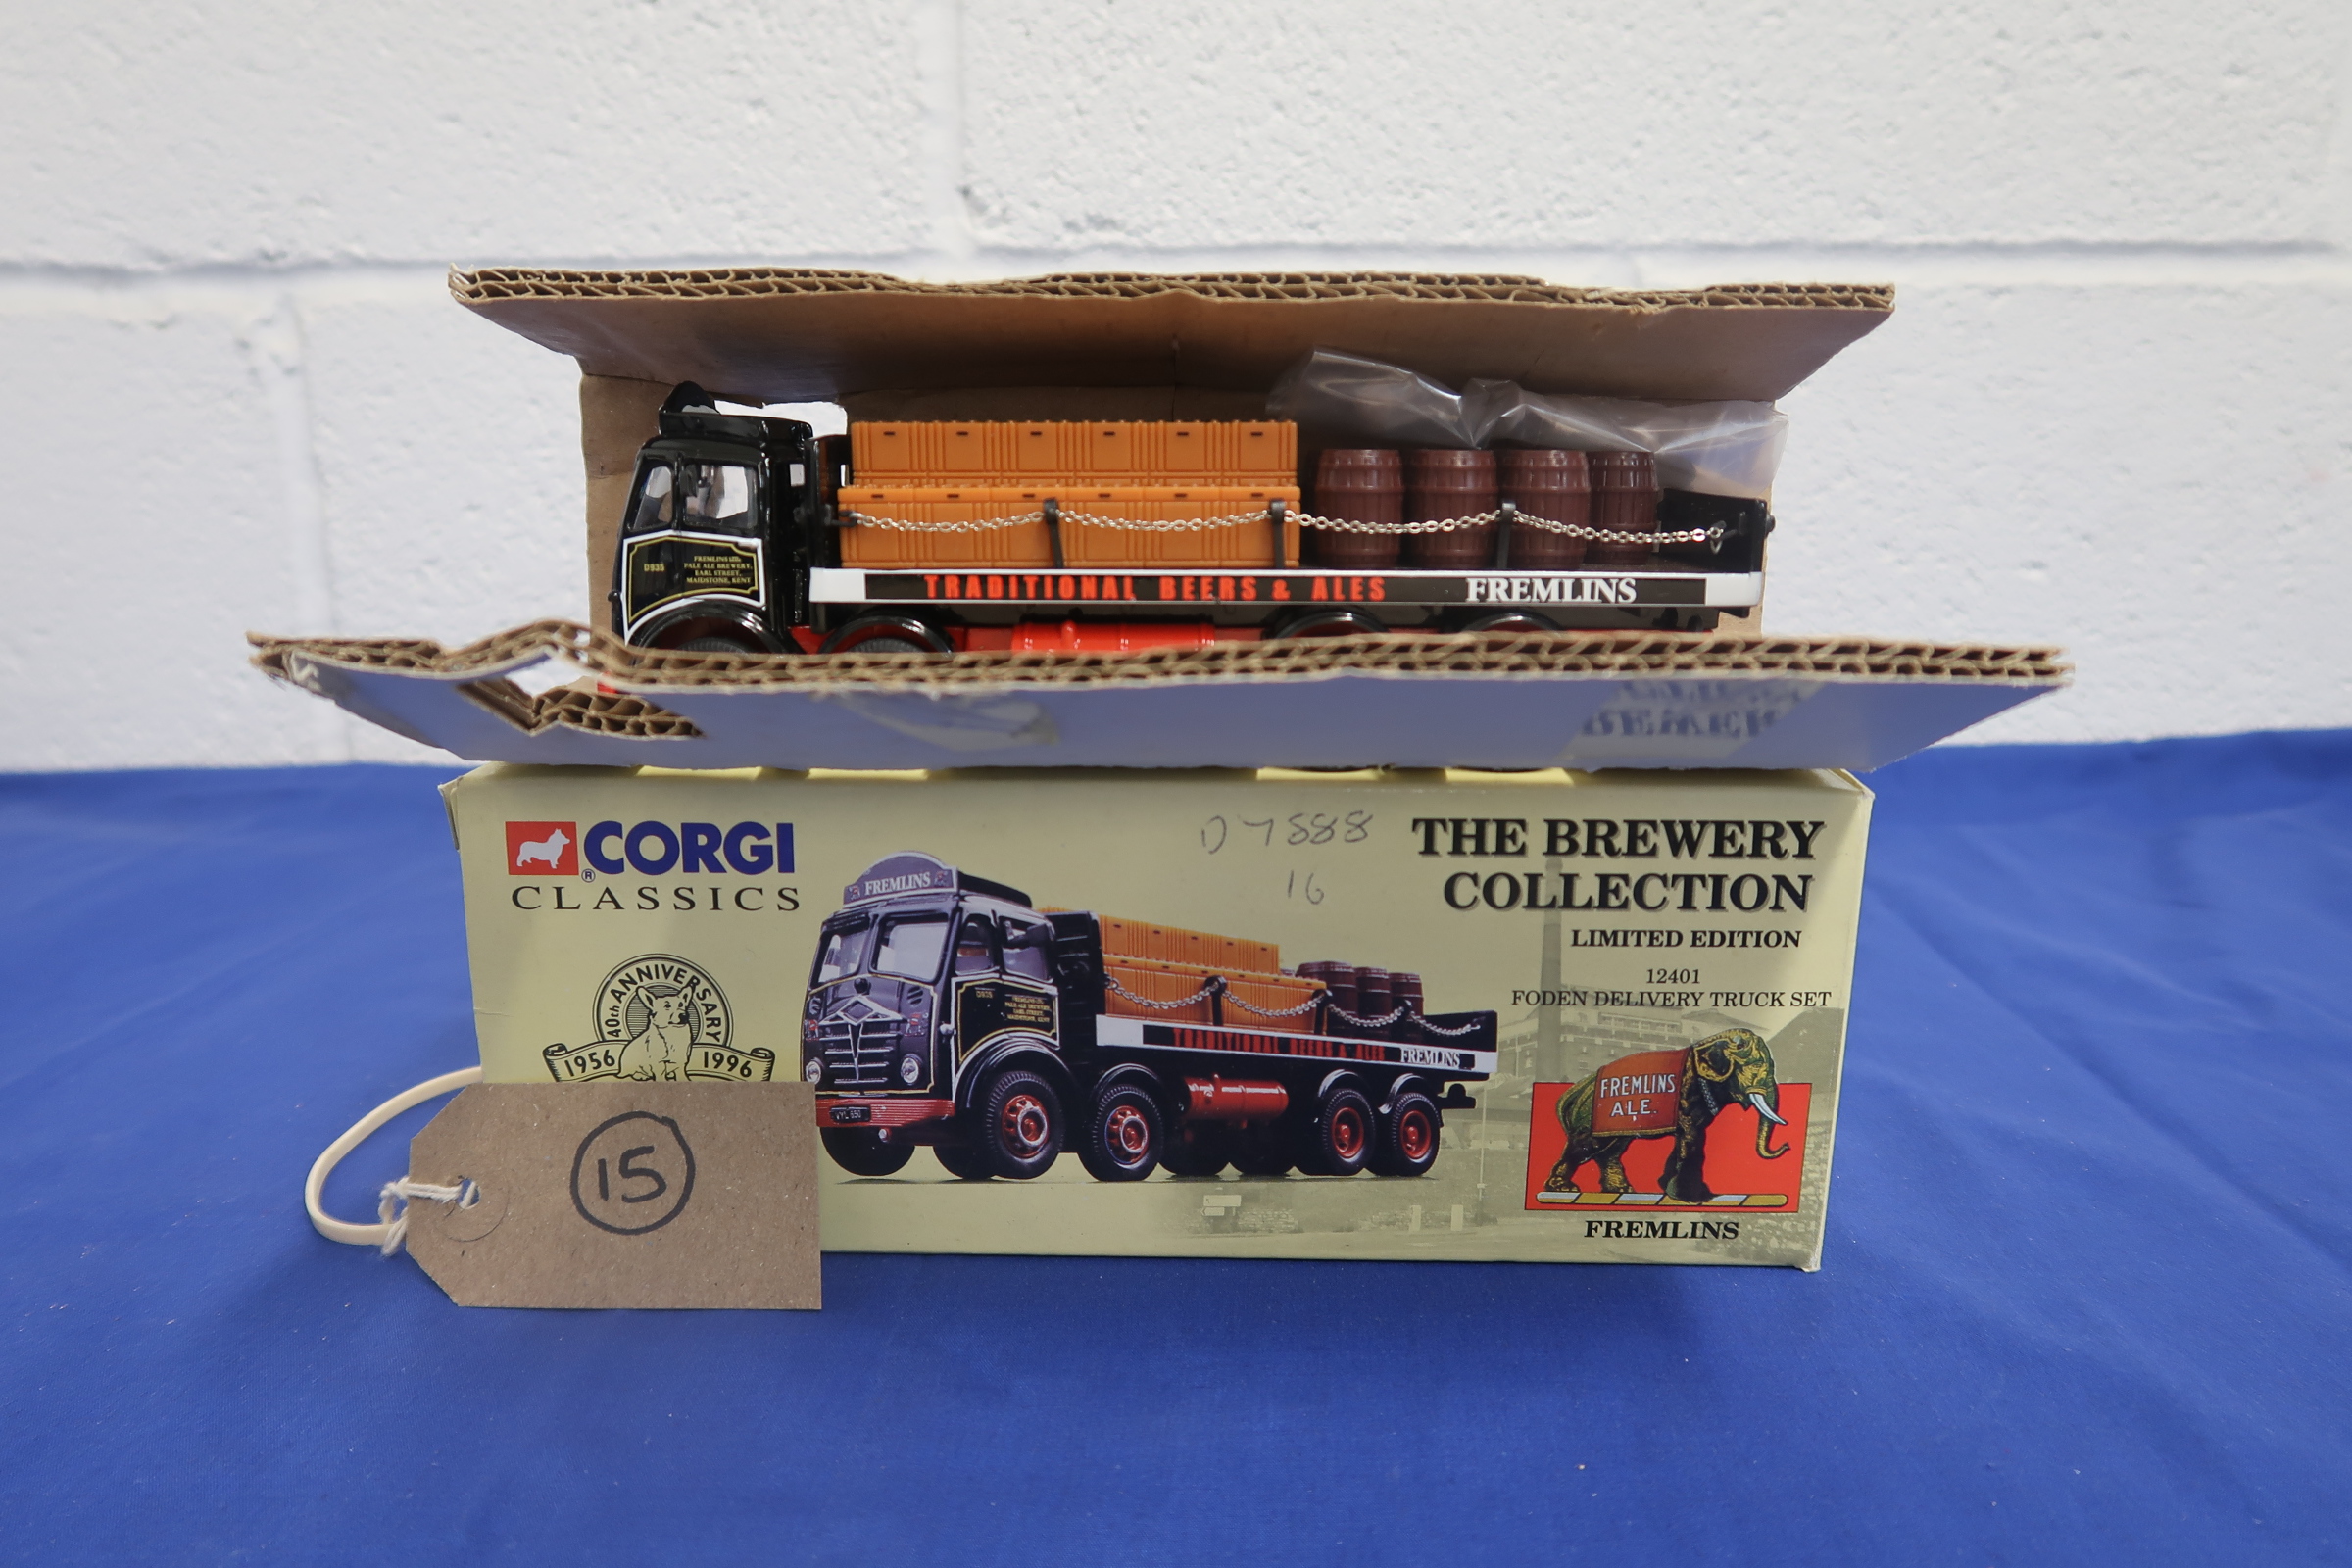 Corgi Foden Delivery Truck Set/Fremlins - Mint/Box Good